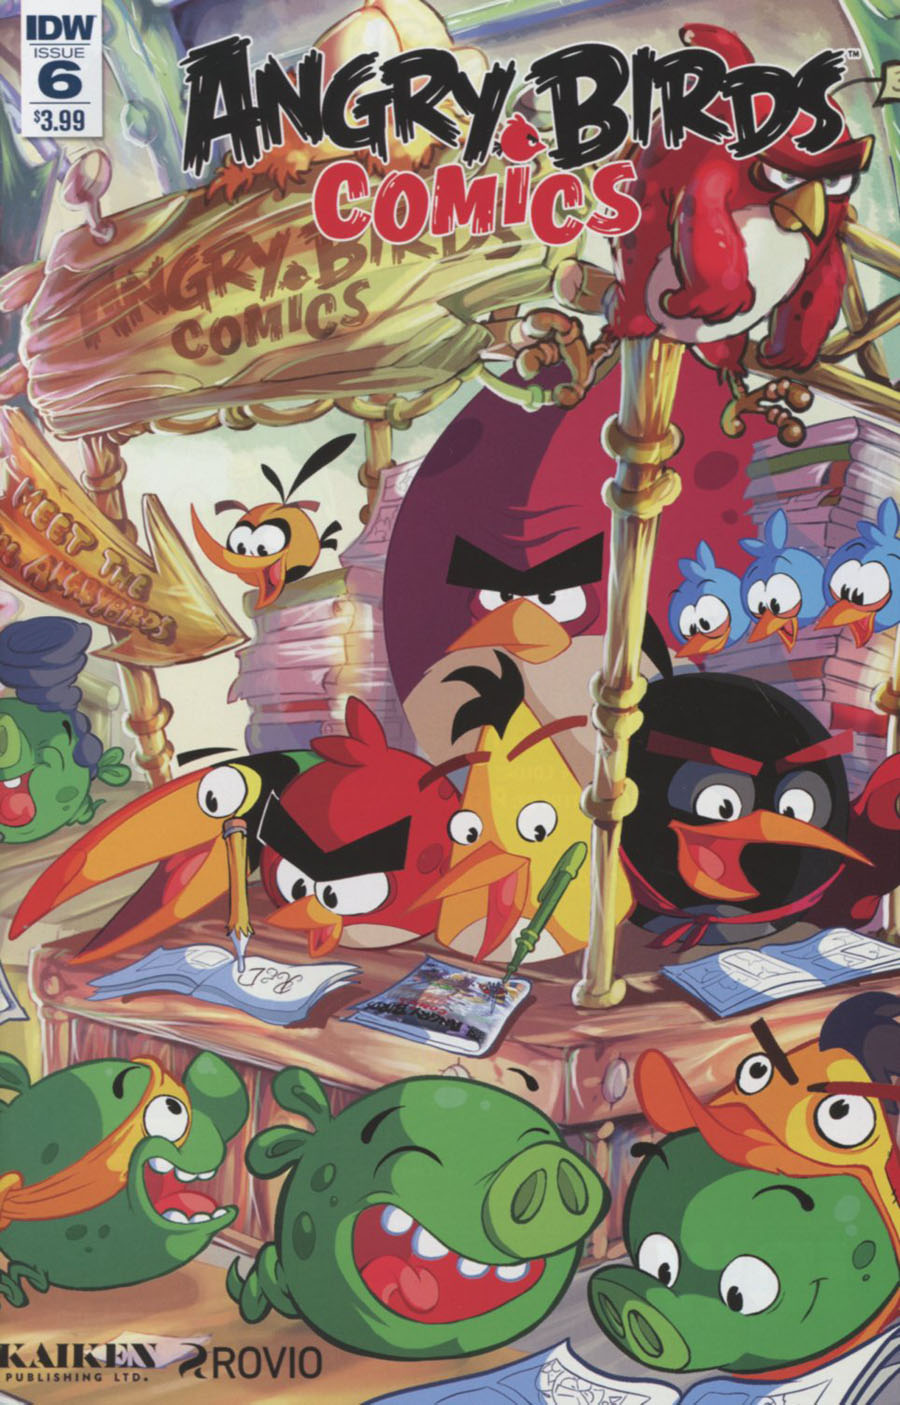 Angry Birds Comics Vol 2 #6 Cover A Regular Ciro Cangiolosi Cover